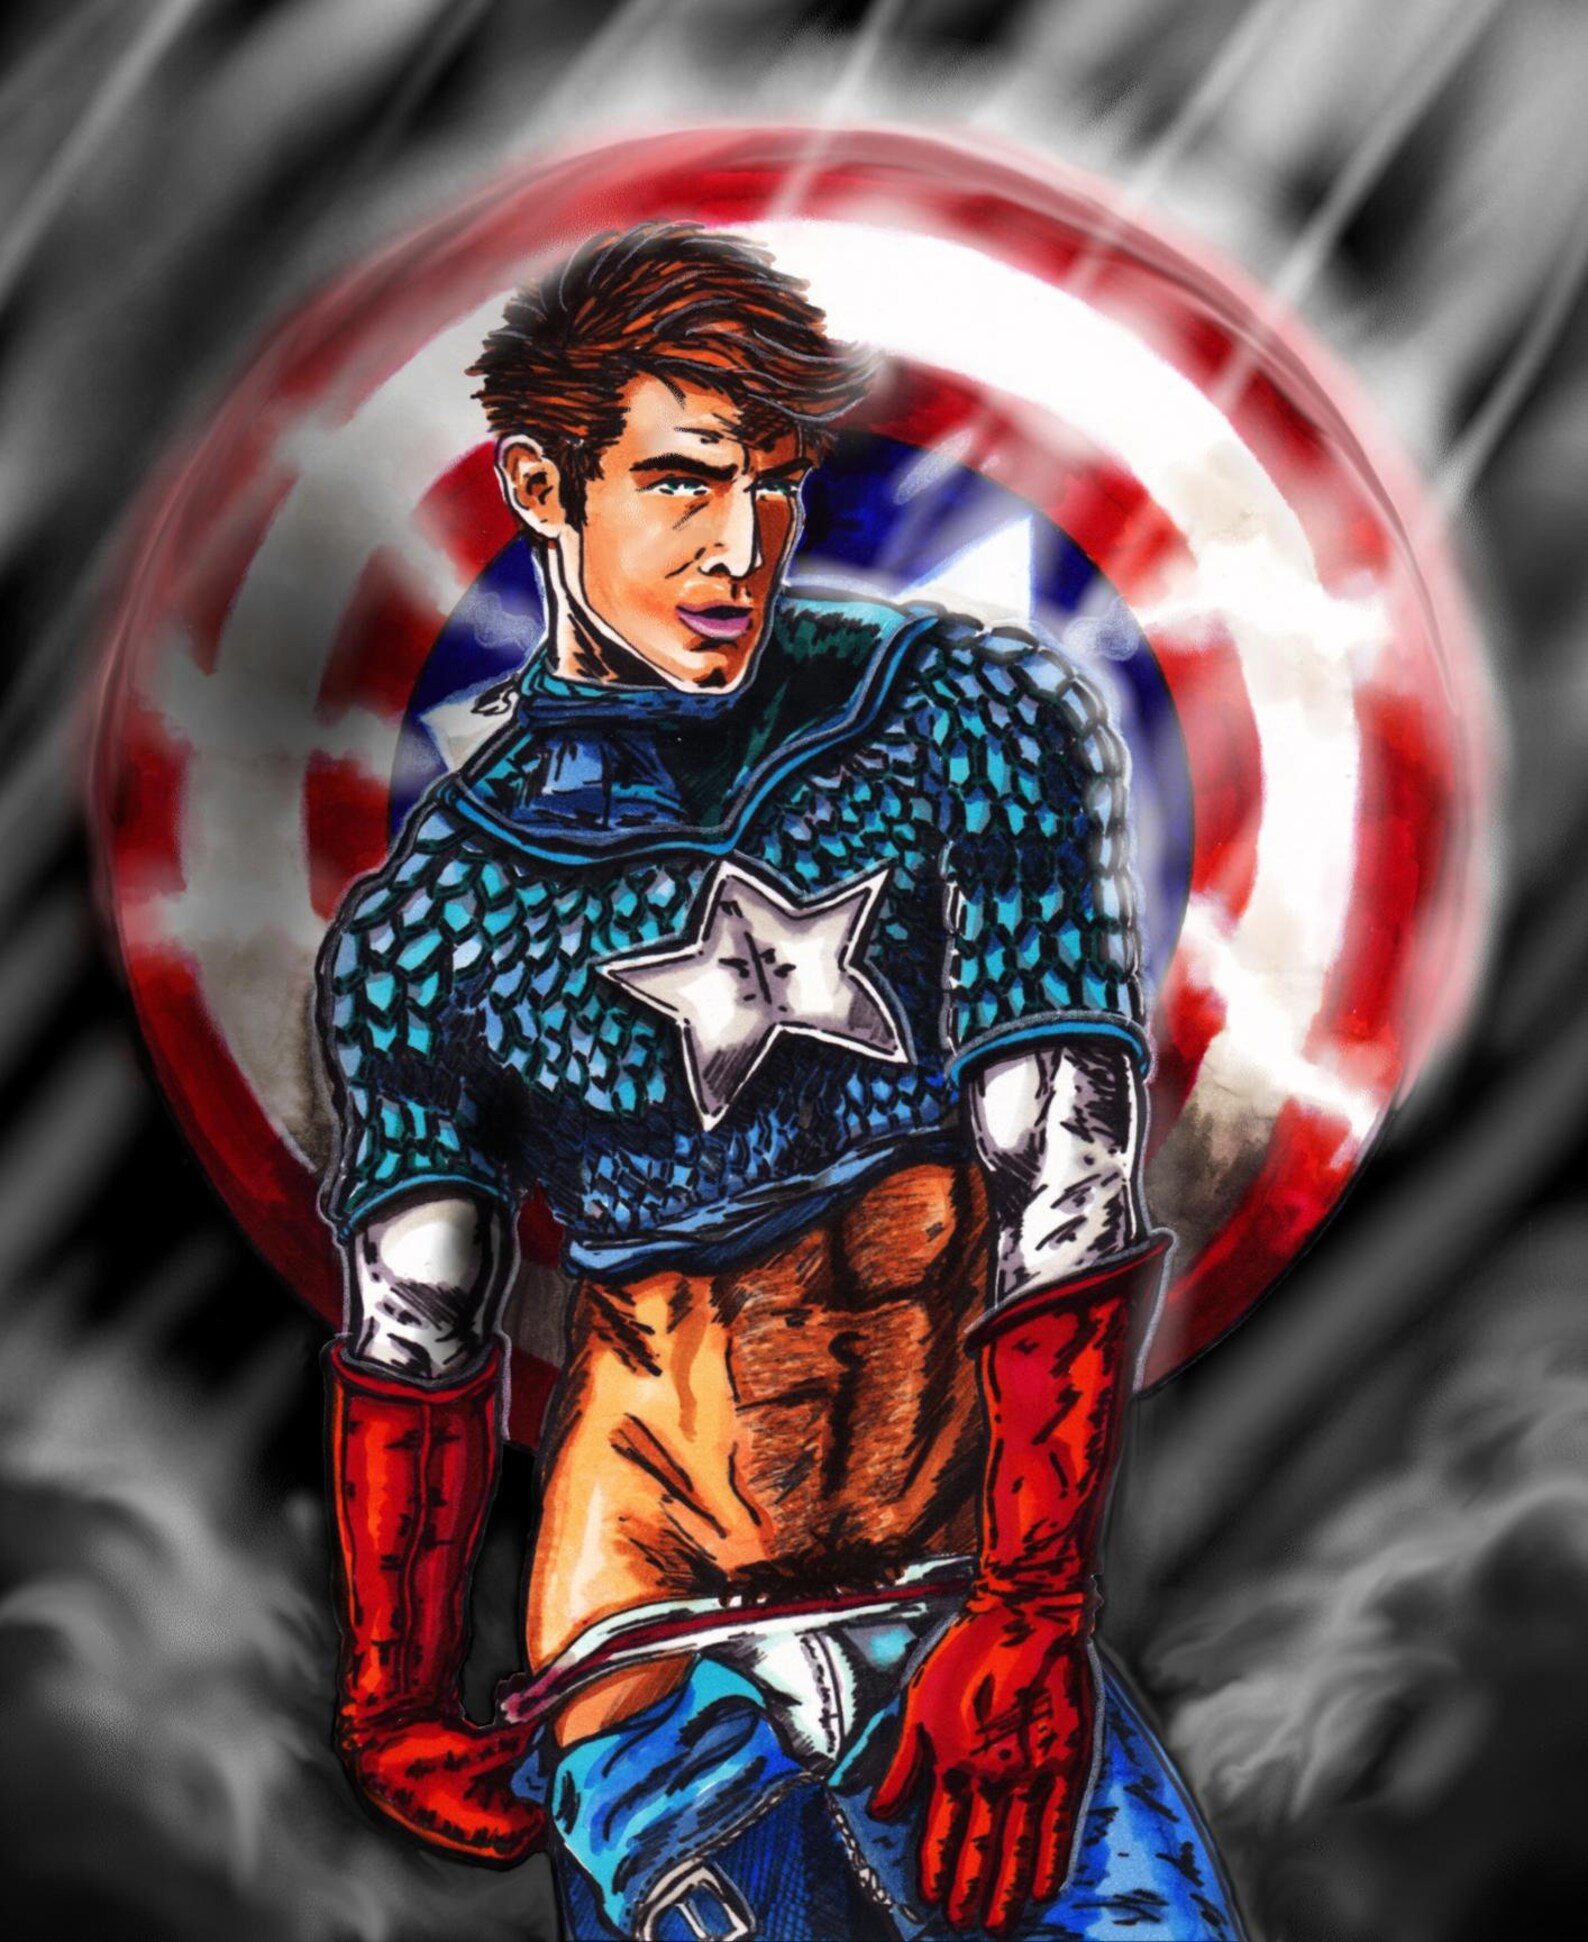 Erotic Avengers Captain America Fan Art Print 11 x 17 signed.